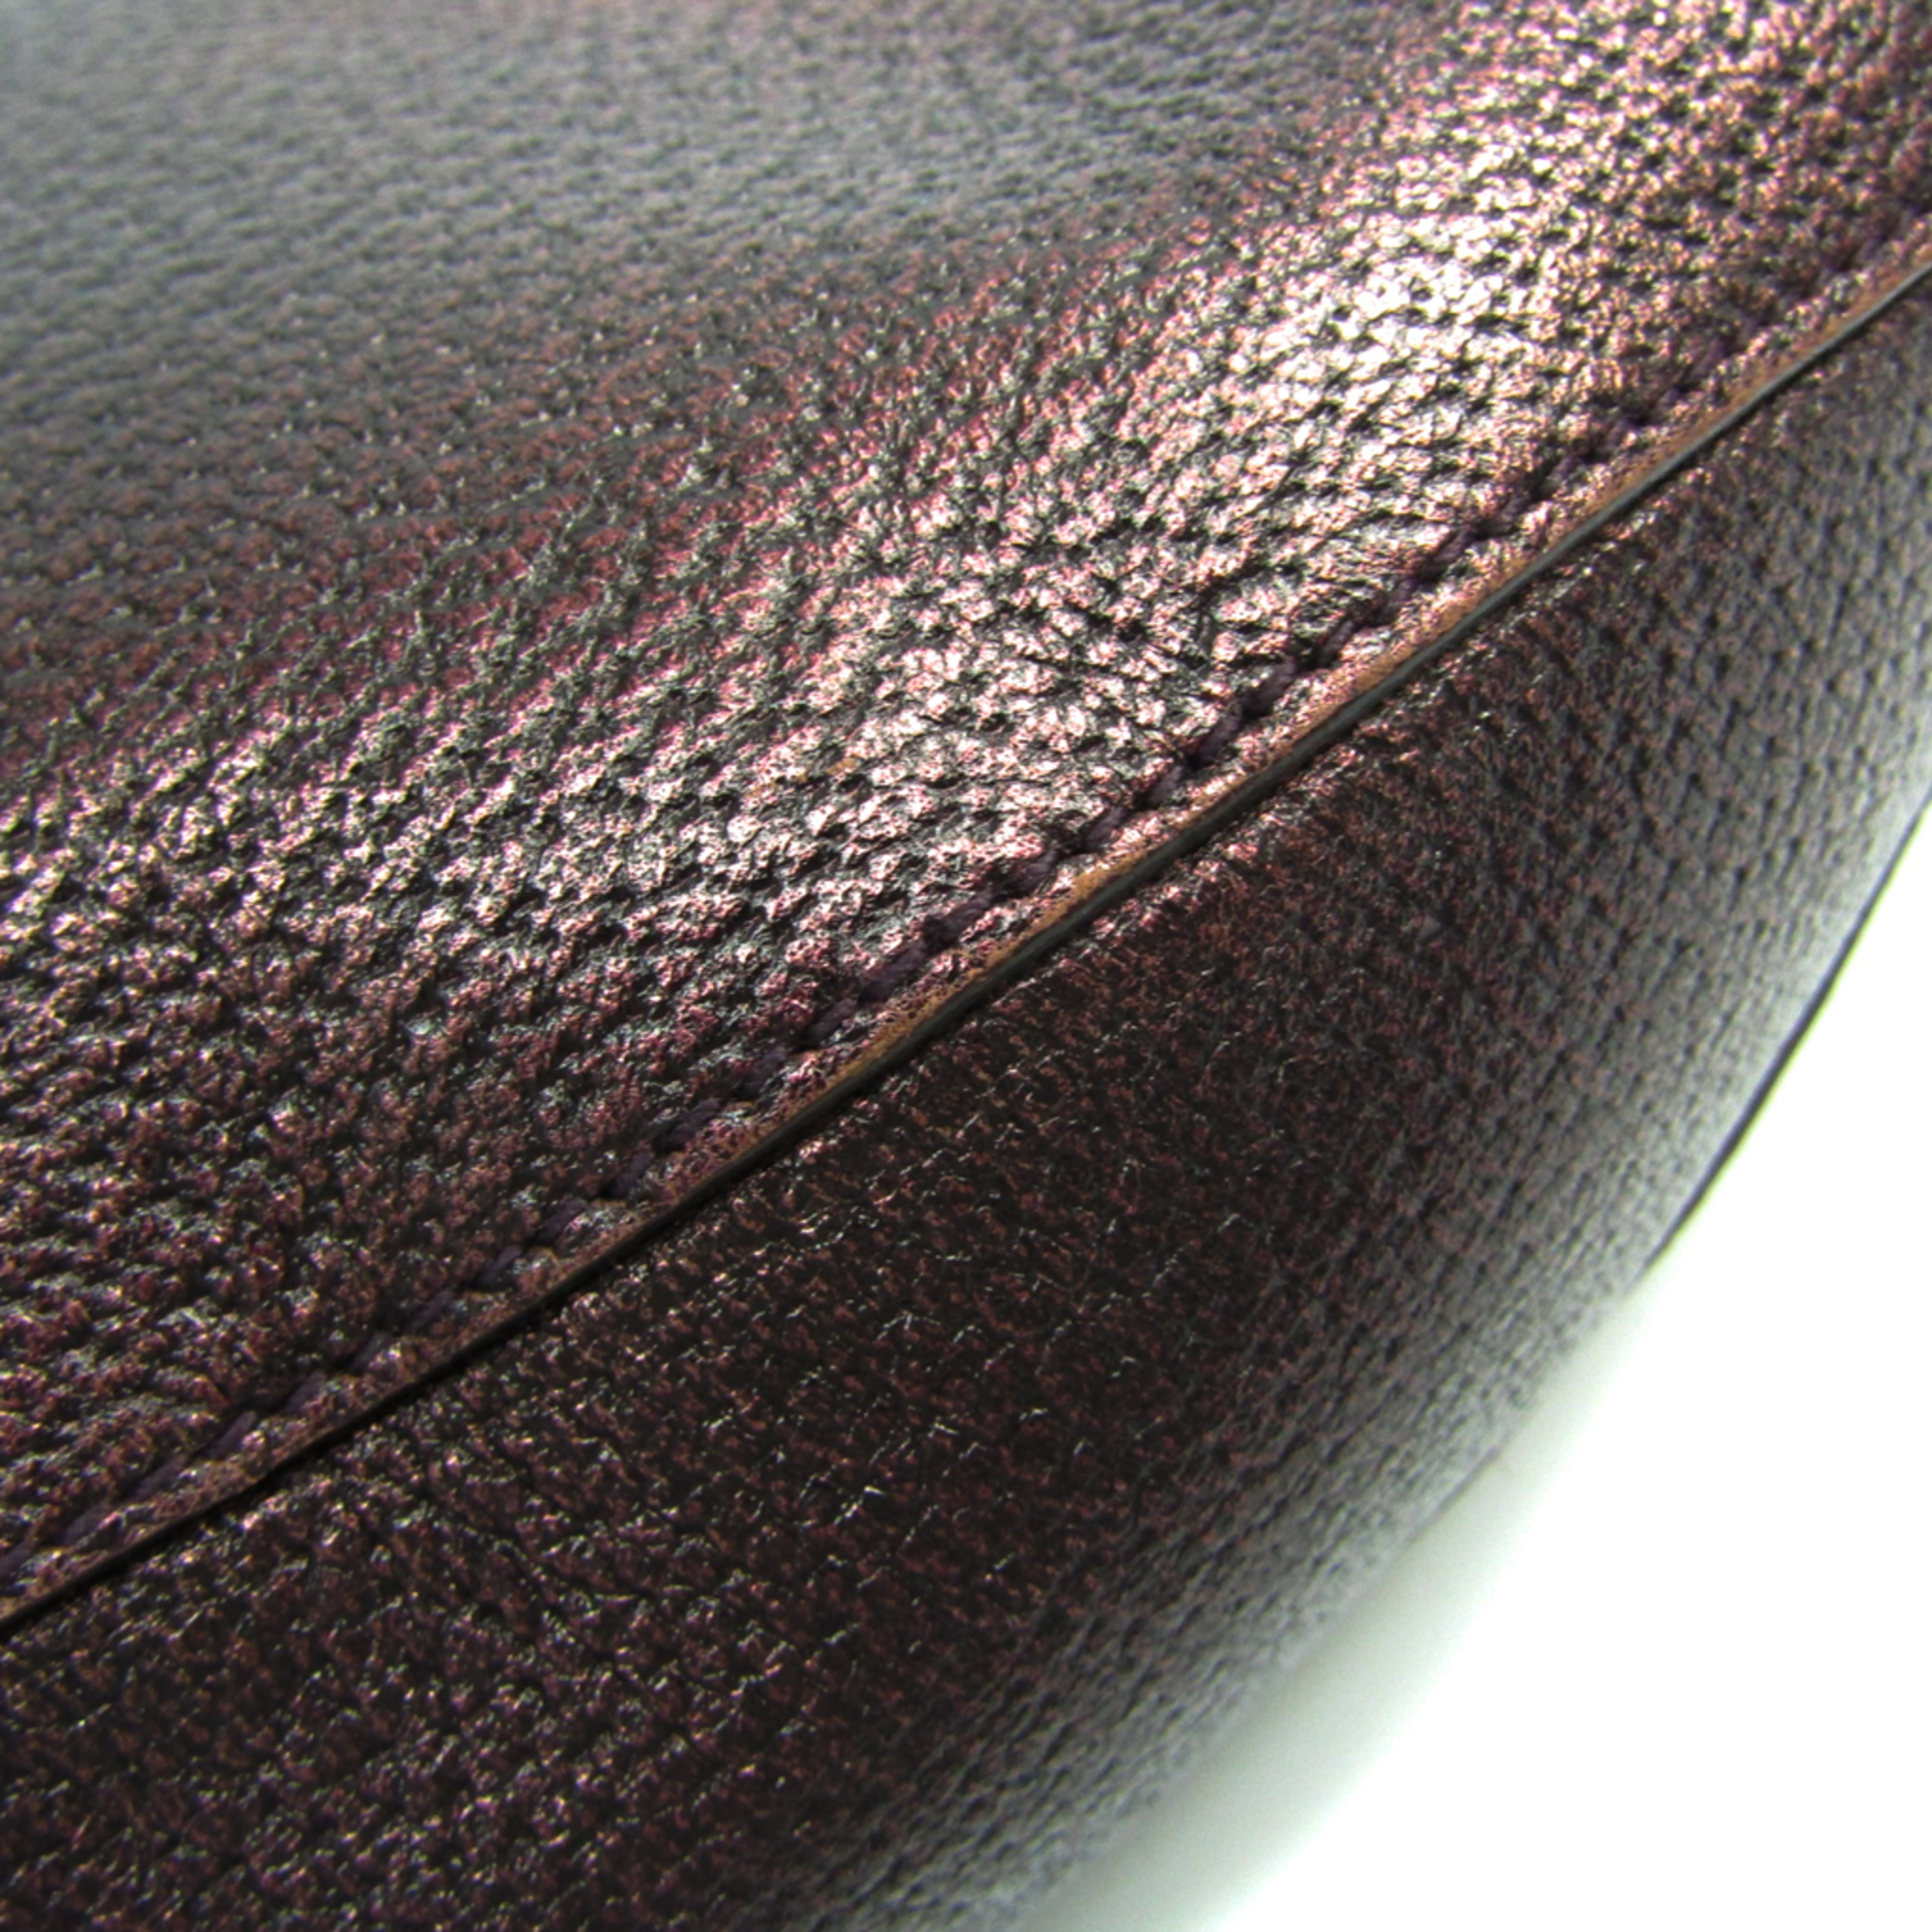 Gucci 131038 Women's Leather Shoulder Bag Metallic Purple